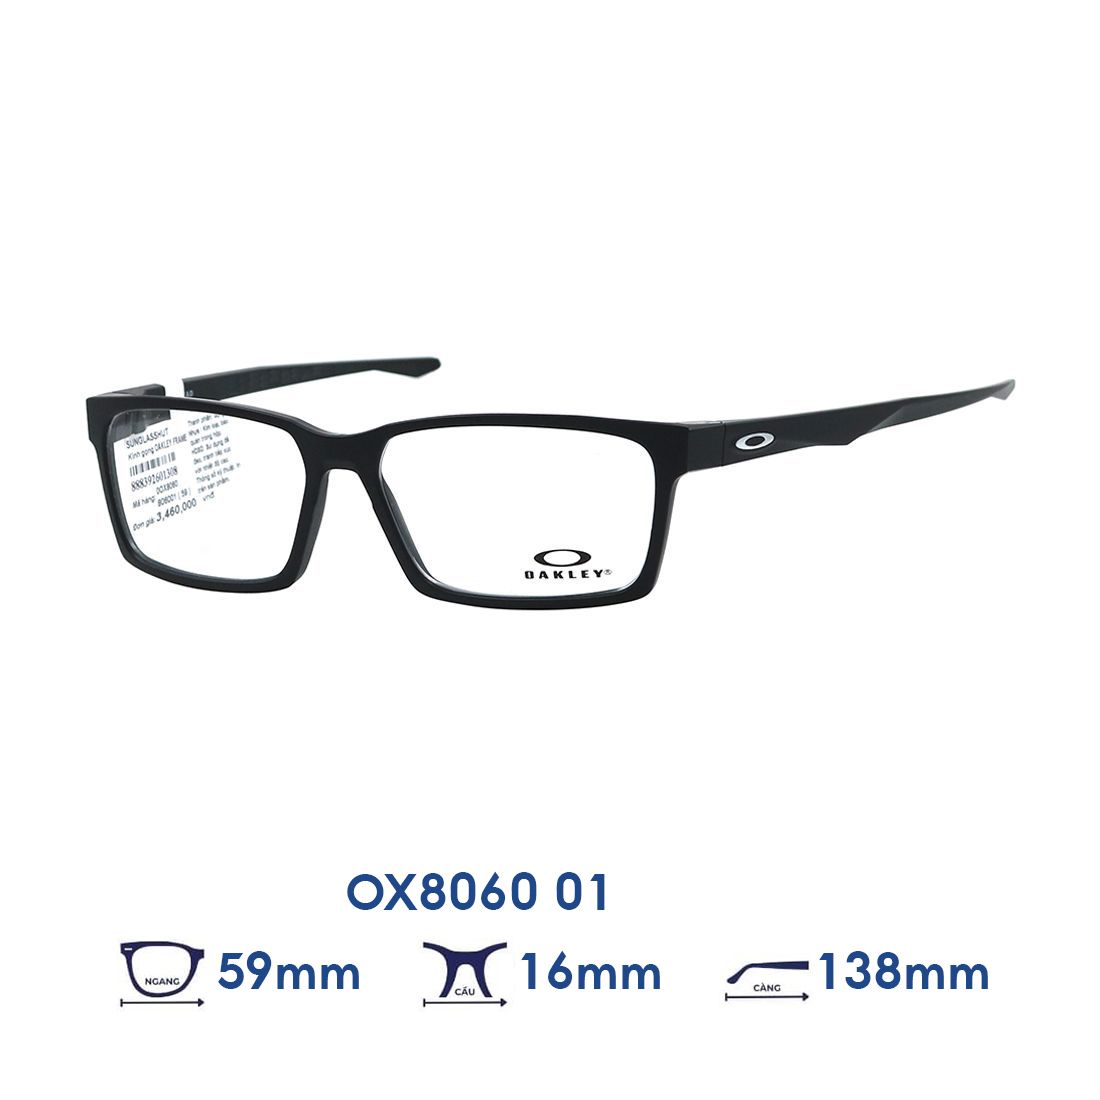  Gọng kính OAKLEY OX8060 01 